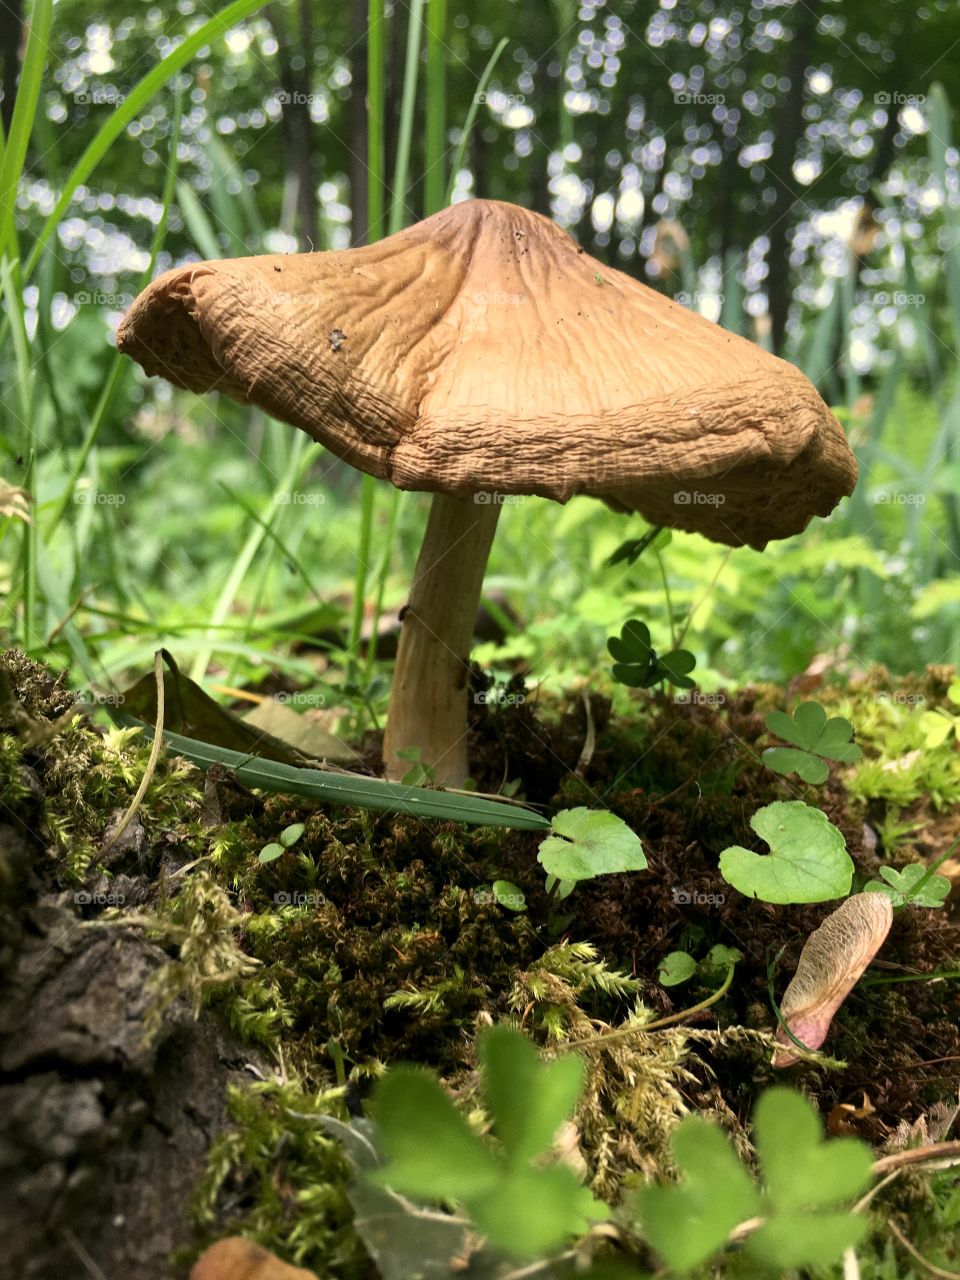 A variety of gilled mushroom